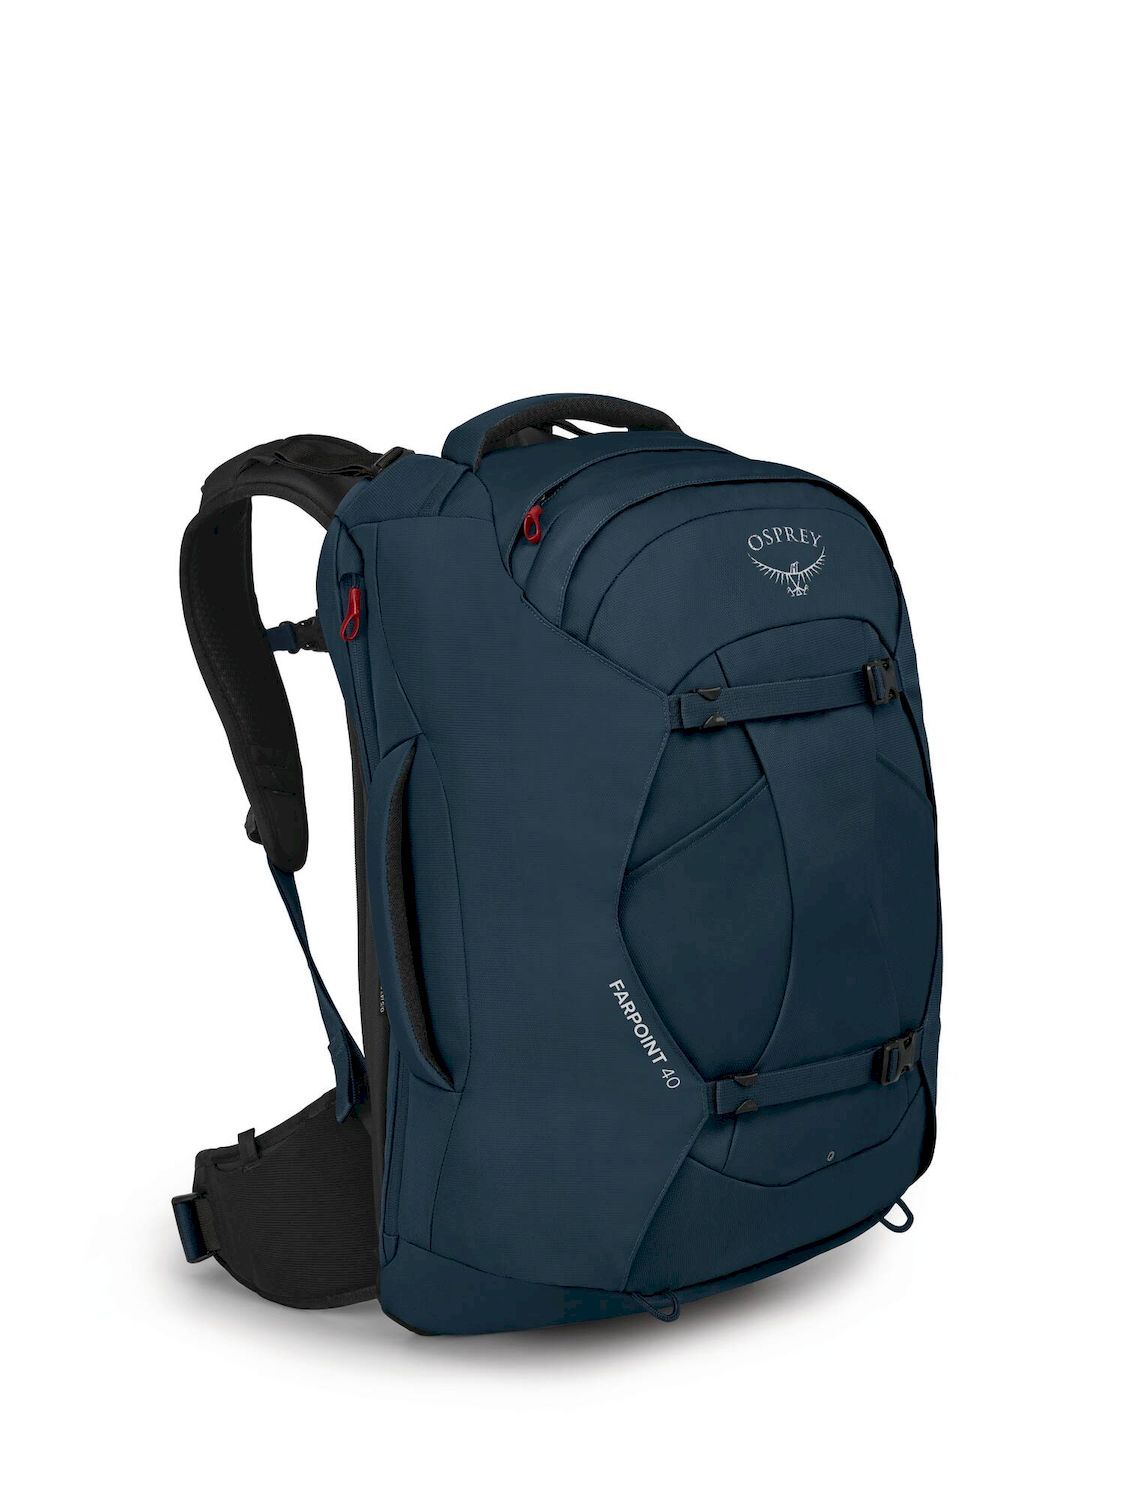 Osprey Farpoint 40 - Travel backpack - Men's